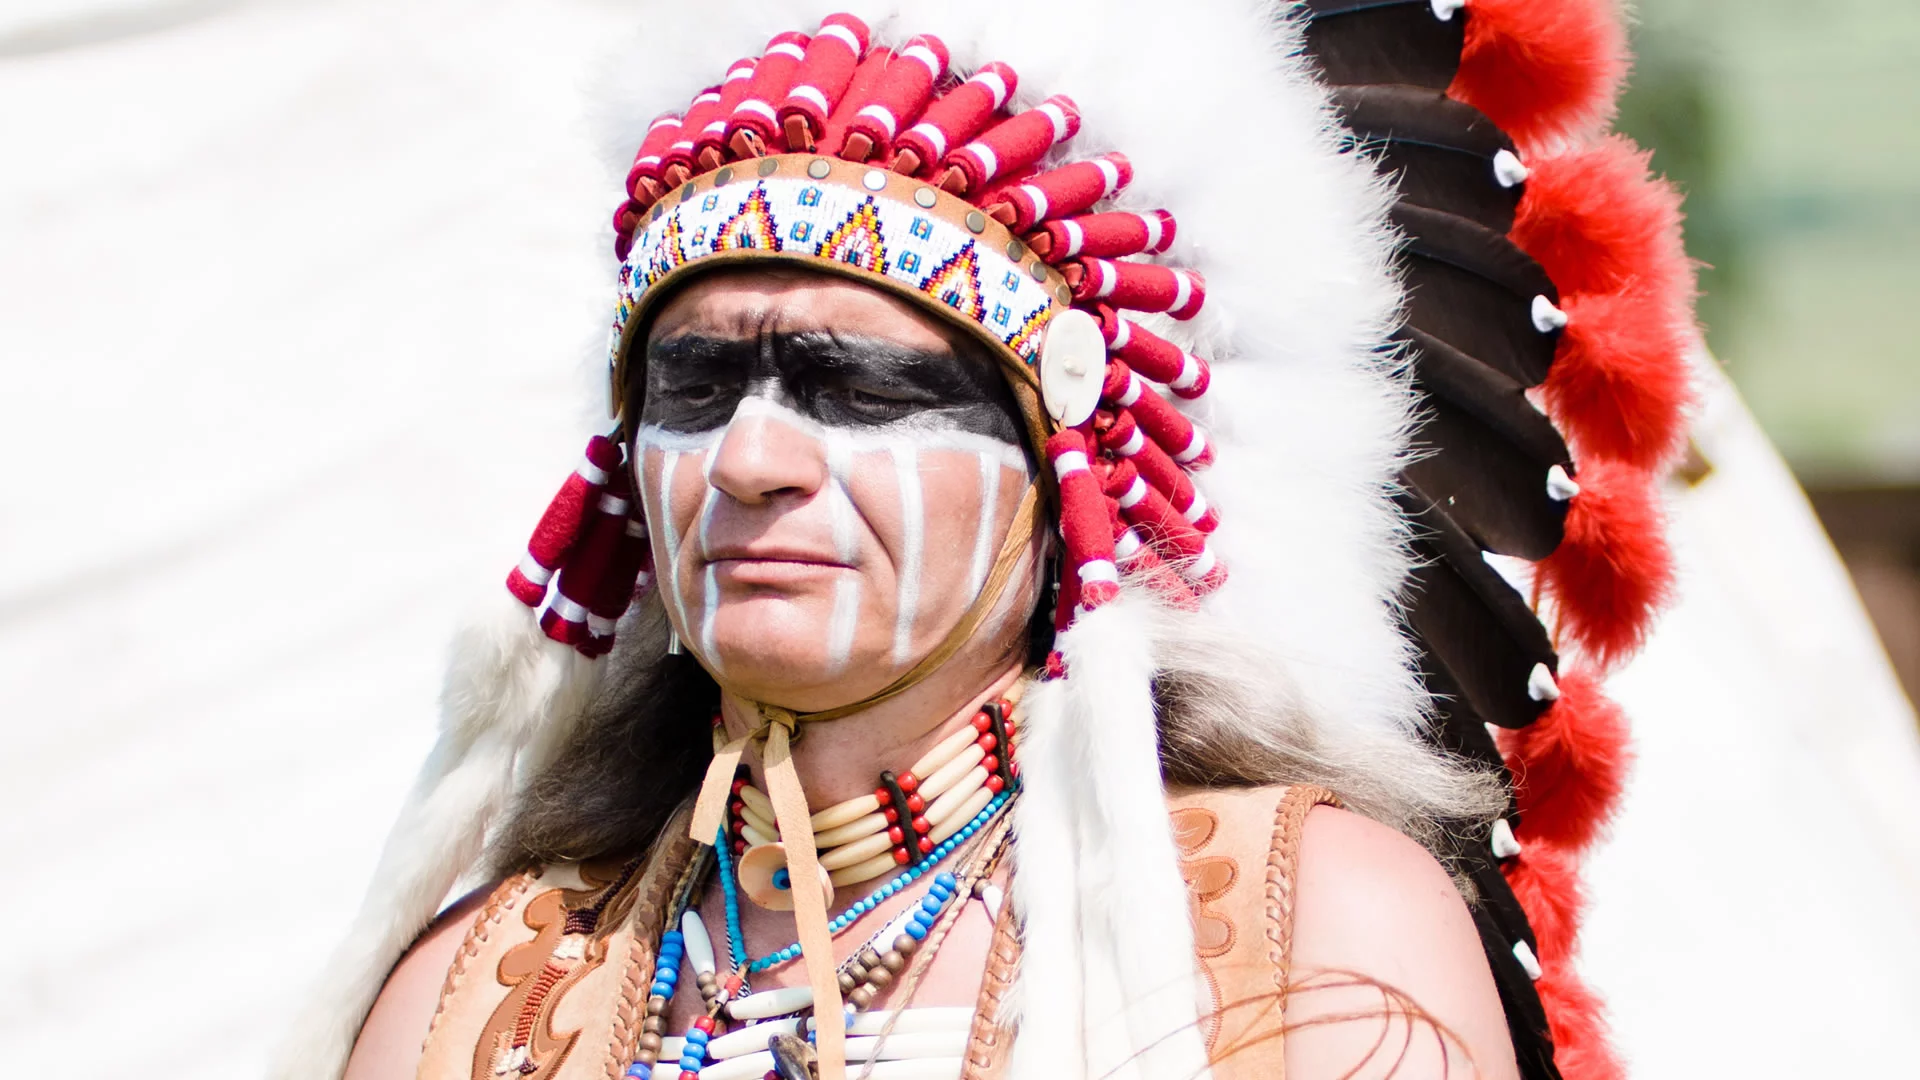 Roupas de índios nativos americanos